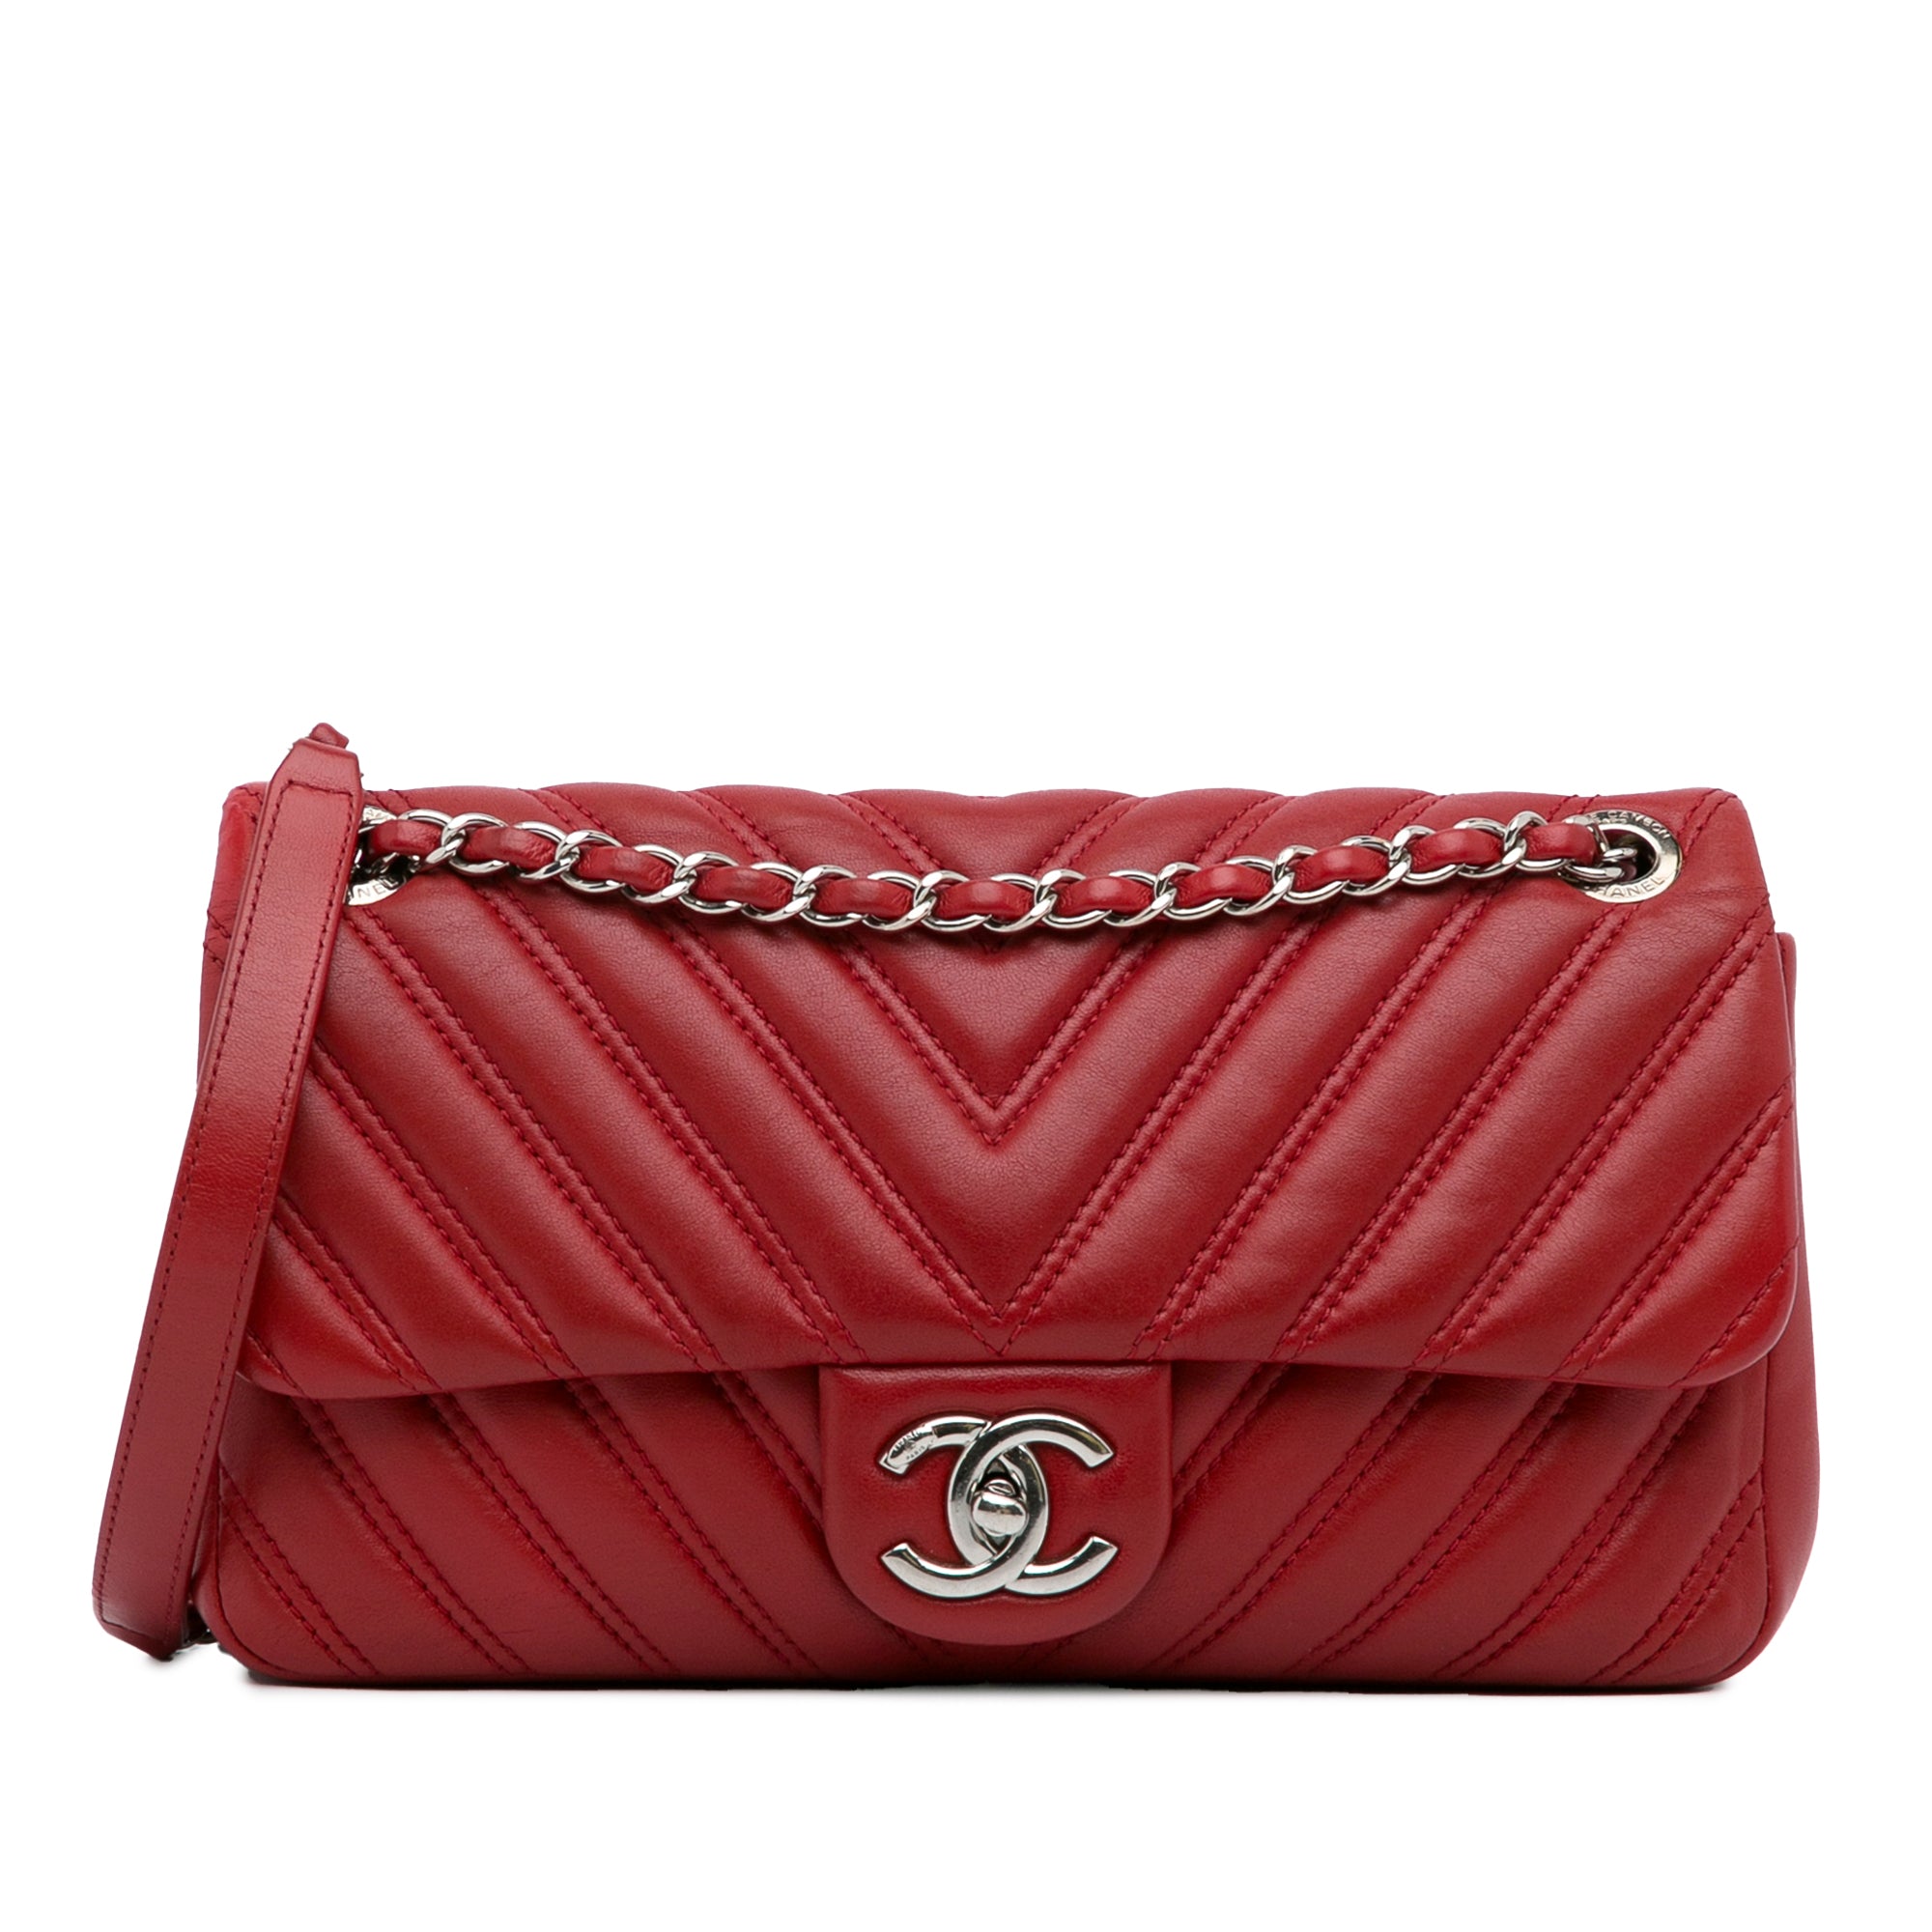 Chanel Red Rectangular Mini Flap Bag